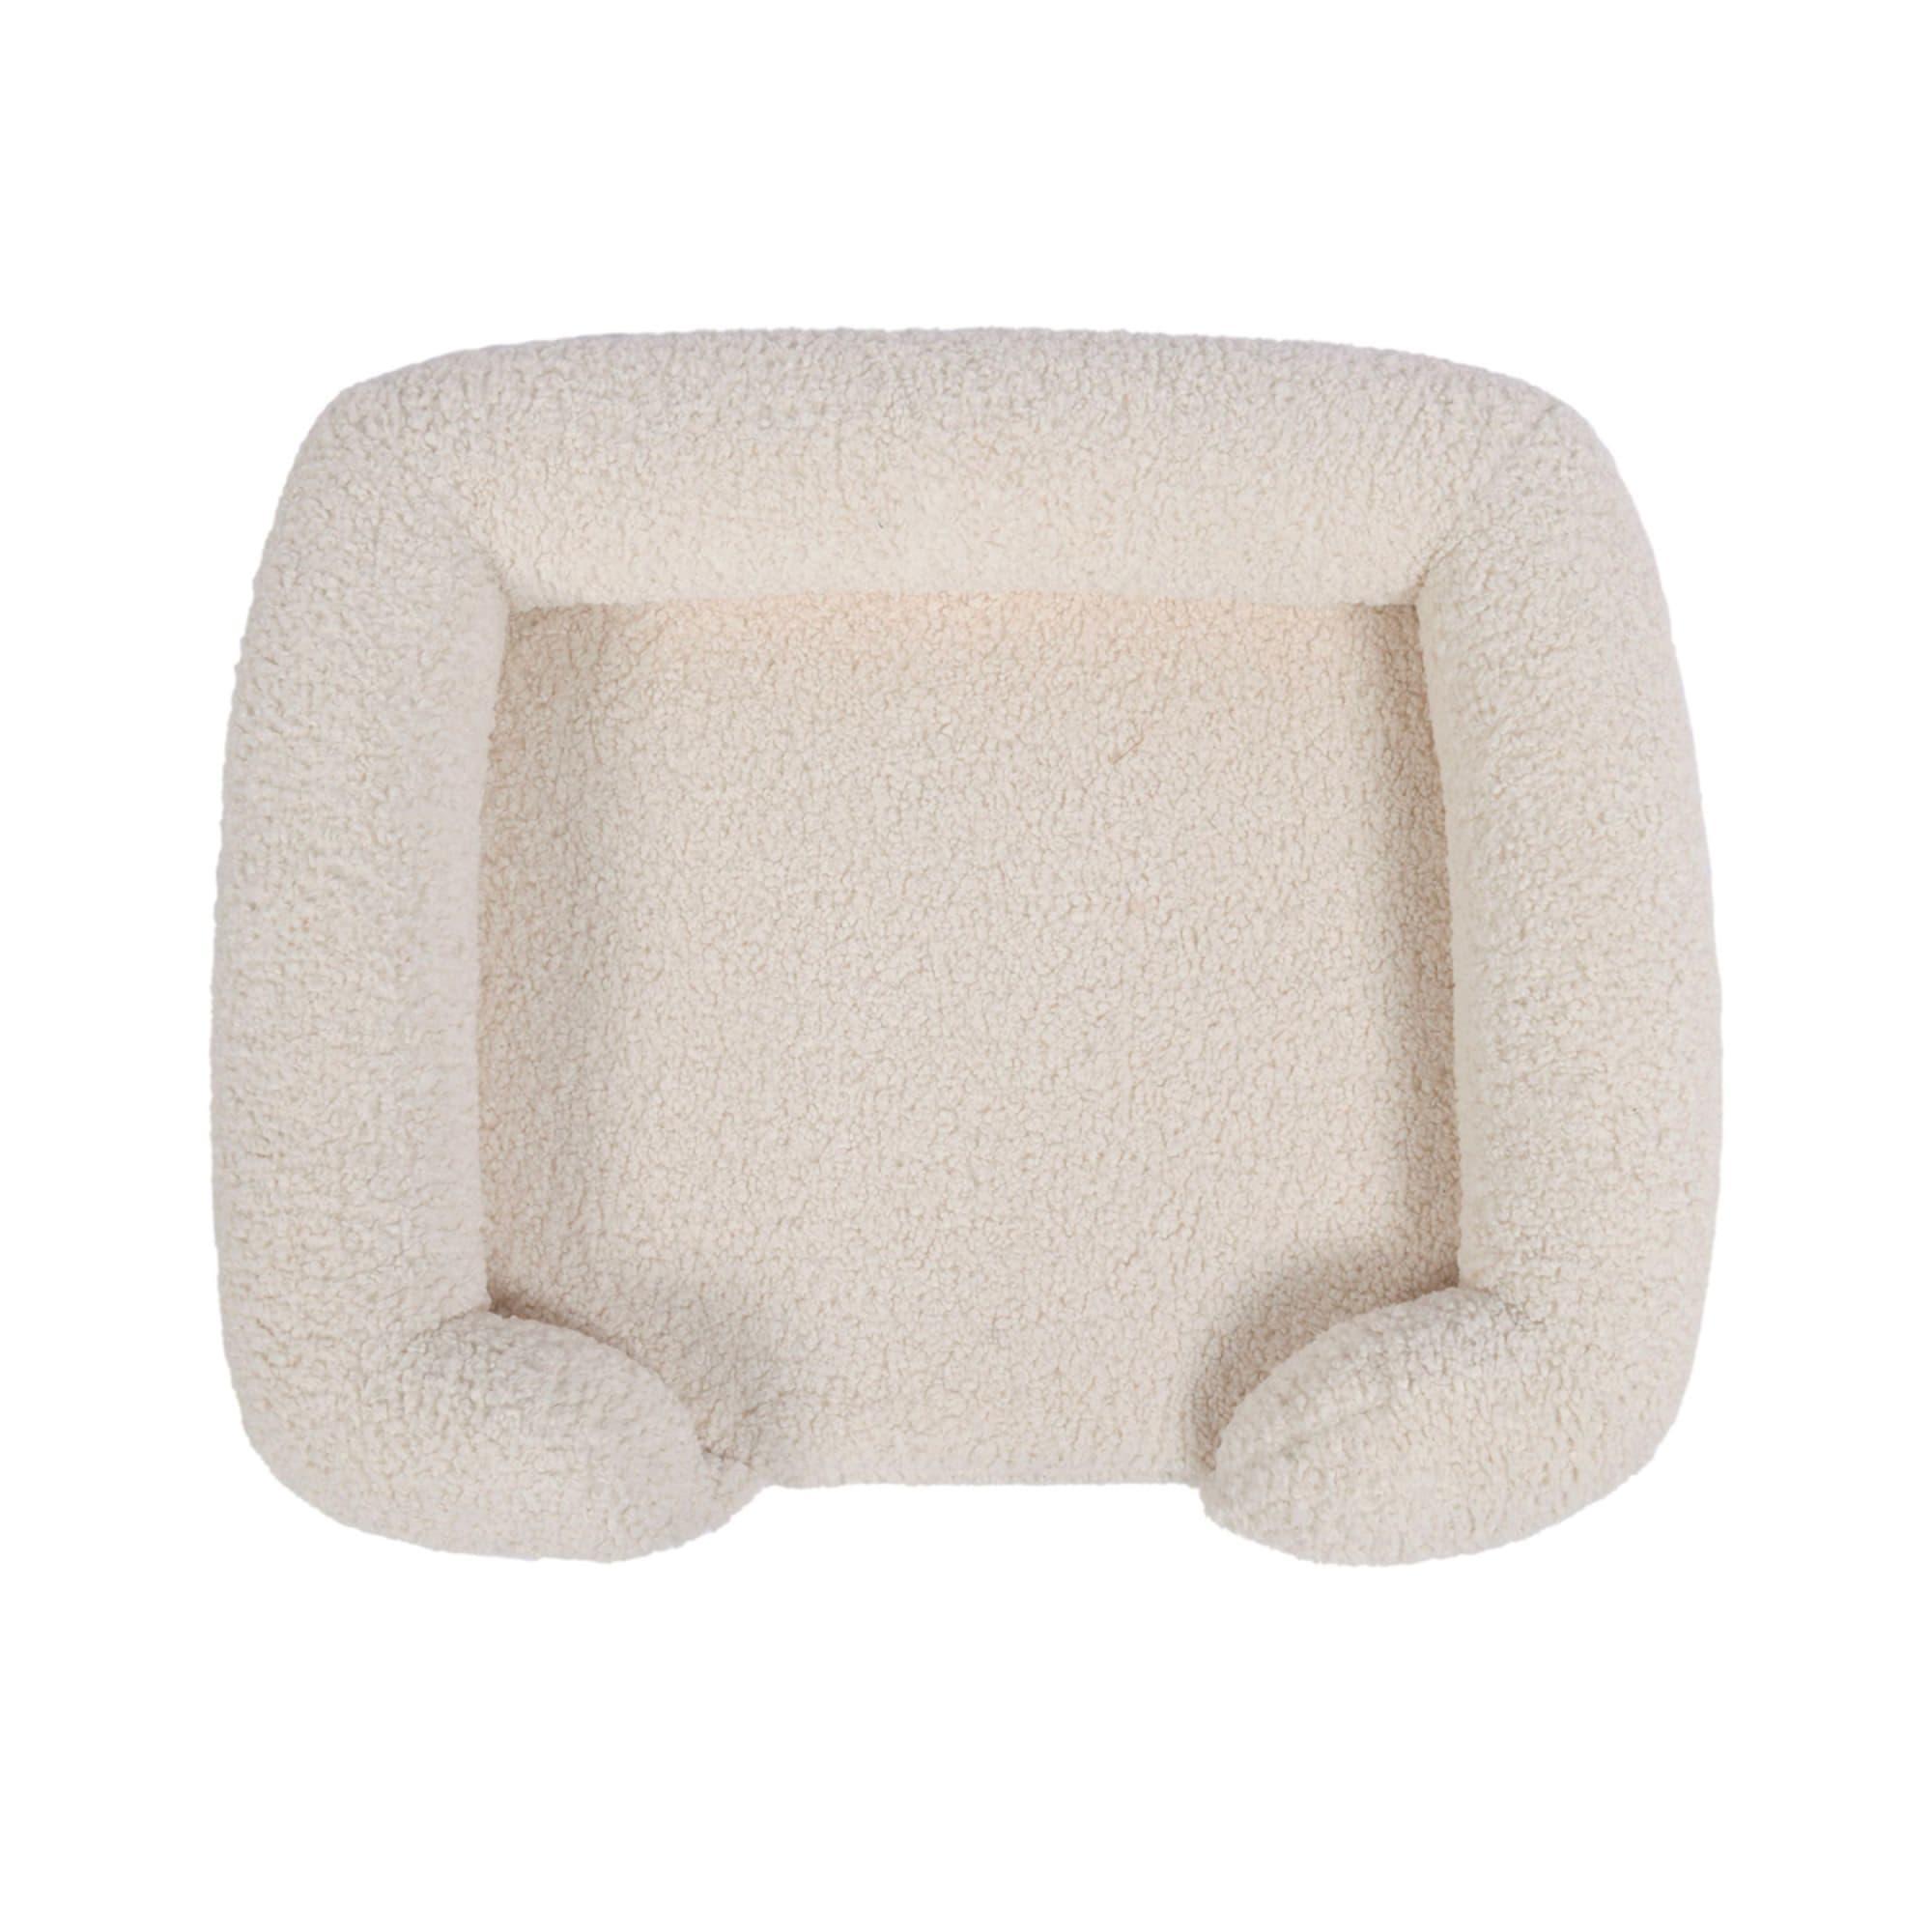 Charlie's Teddy Fleece Orthopedic Memory Foam Sofa Dog Bed Small Cream Image 4